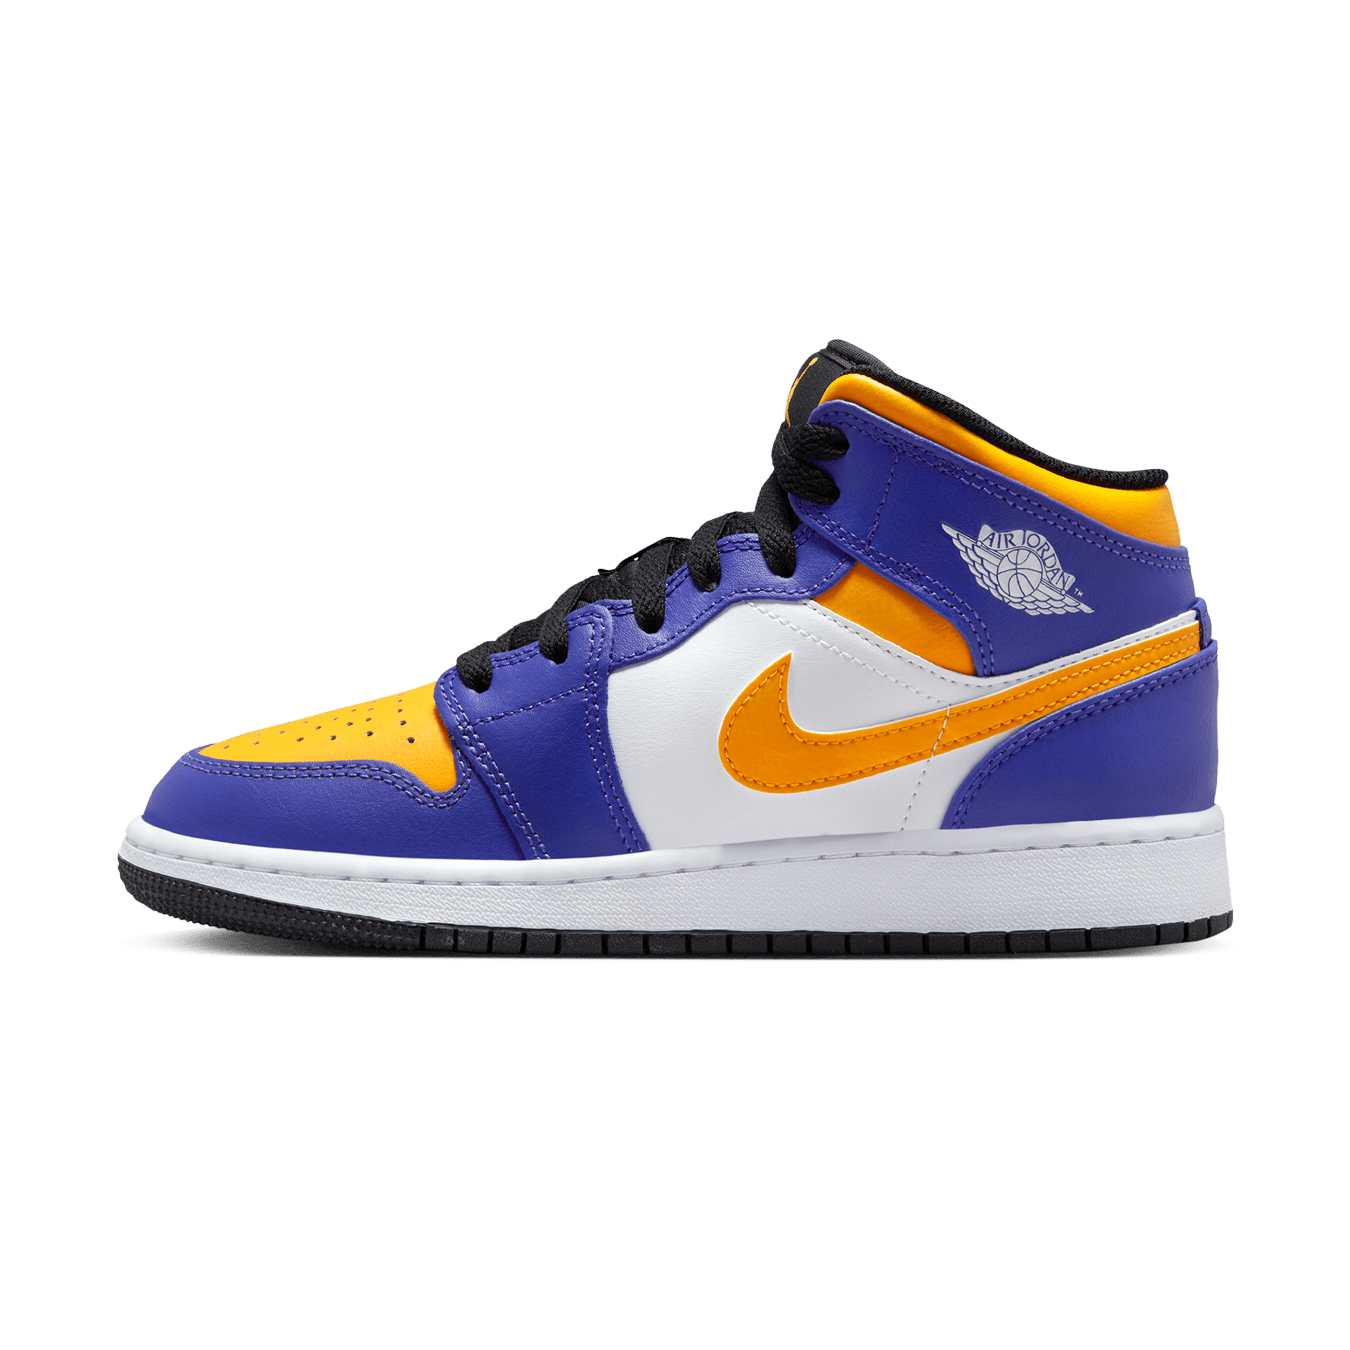 Los Angeles Lakers Air Jordan 11 sneaker shoes - LIMITED EDITION